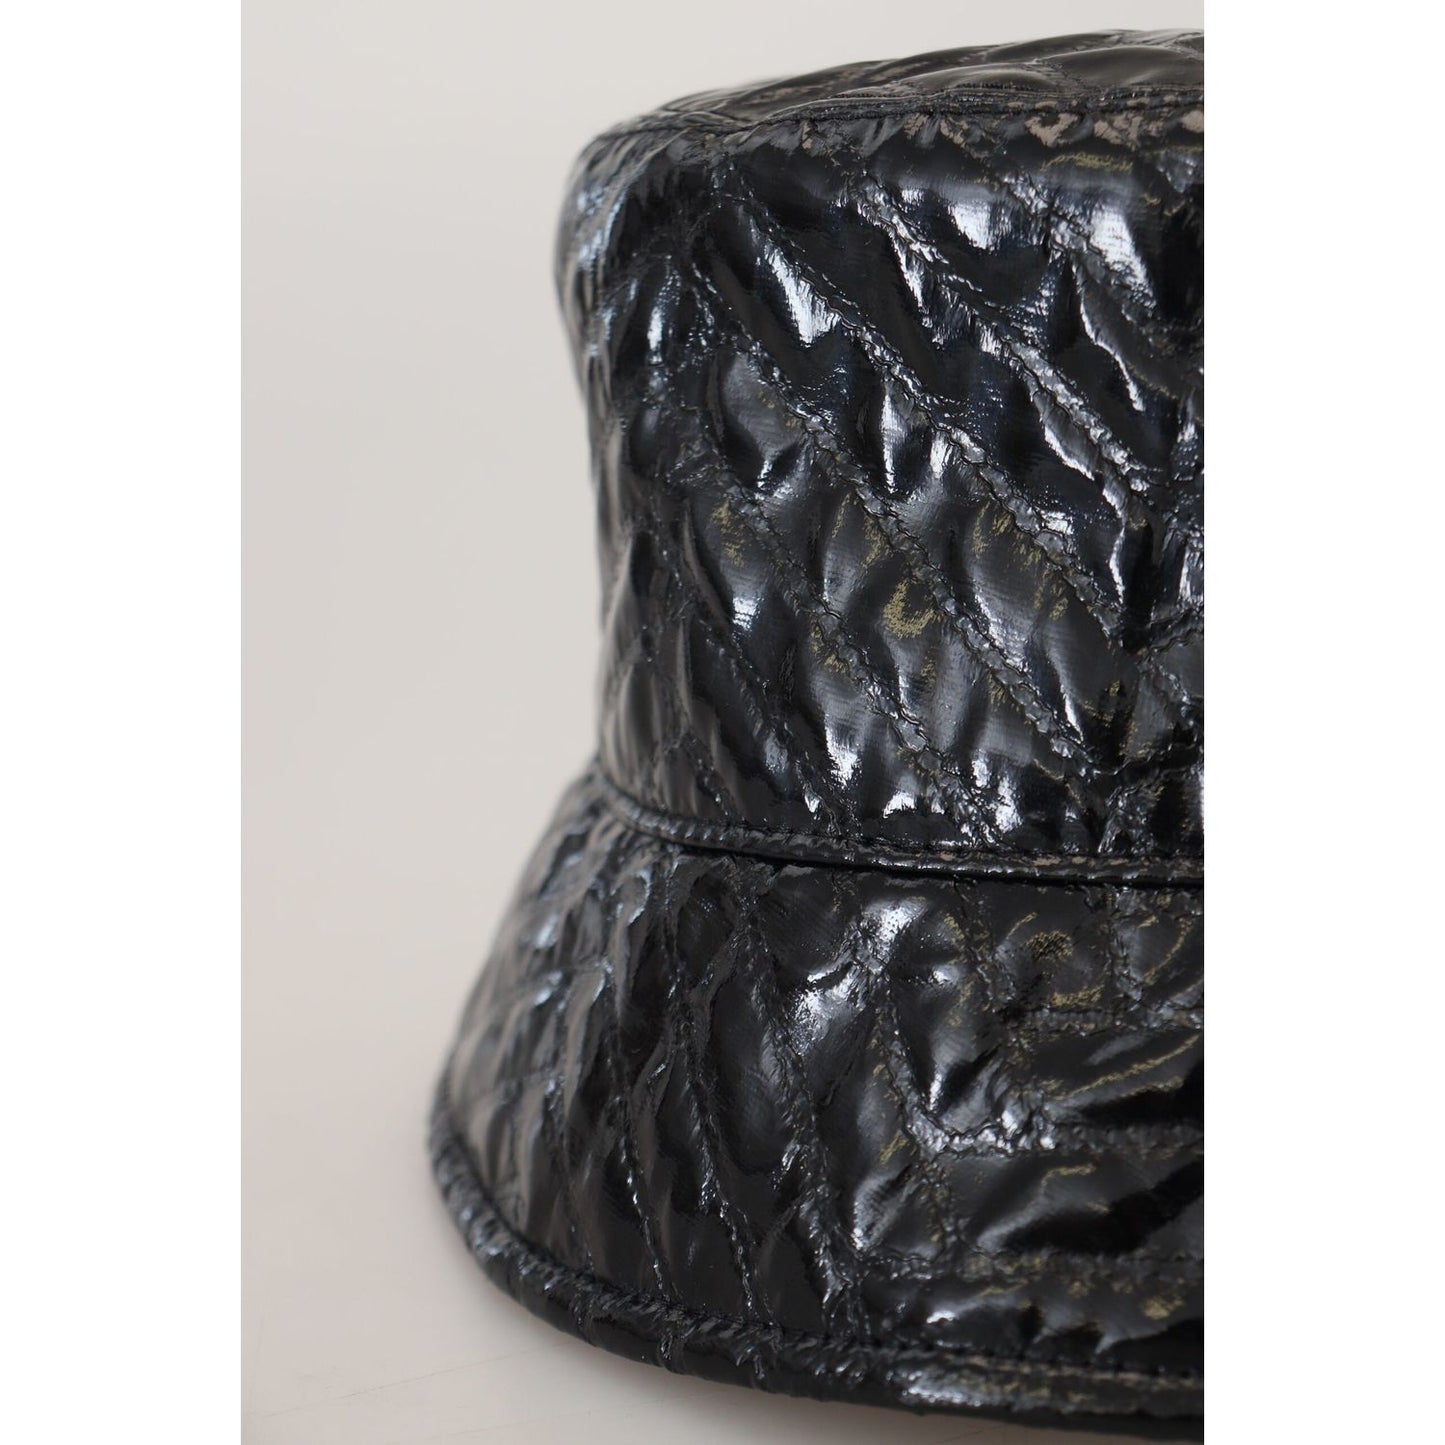 Dolce & Gabbana Elegant Black Bucket Cap black-quilted-faux-leather-women-bucket-cap-hat